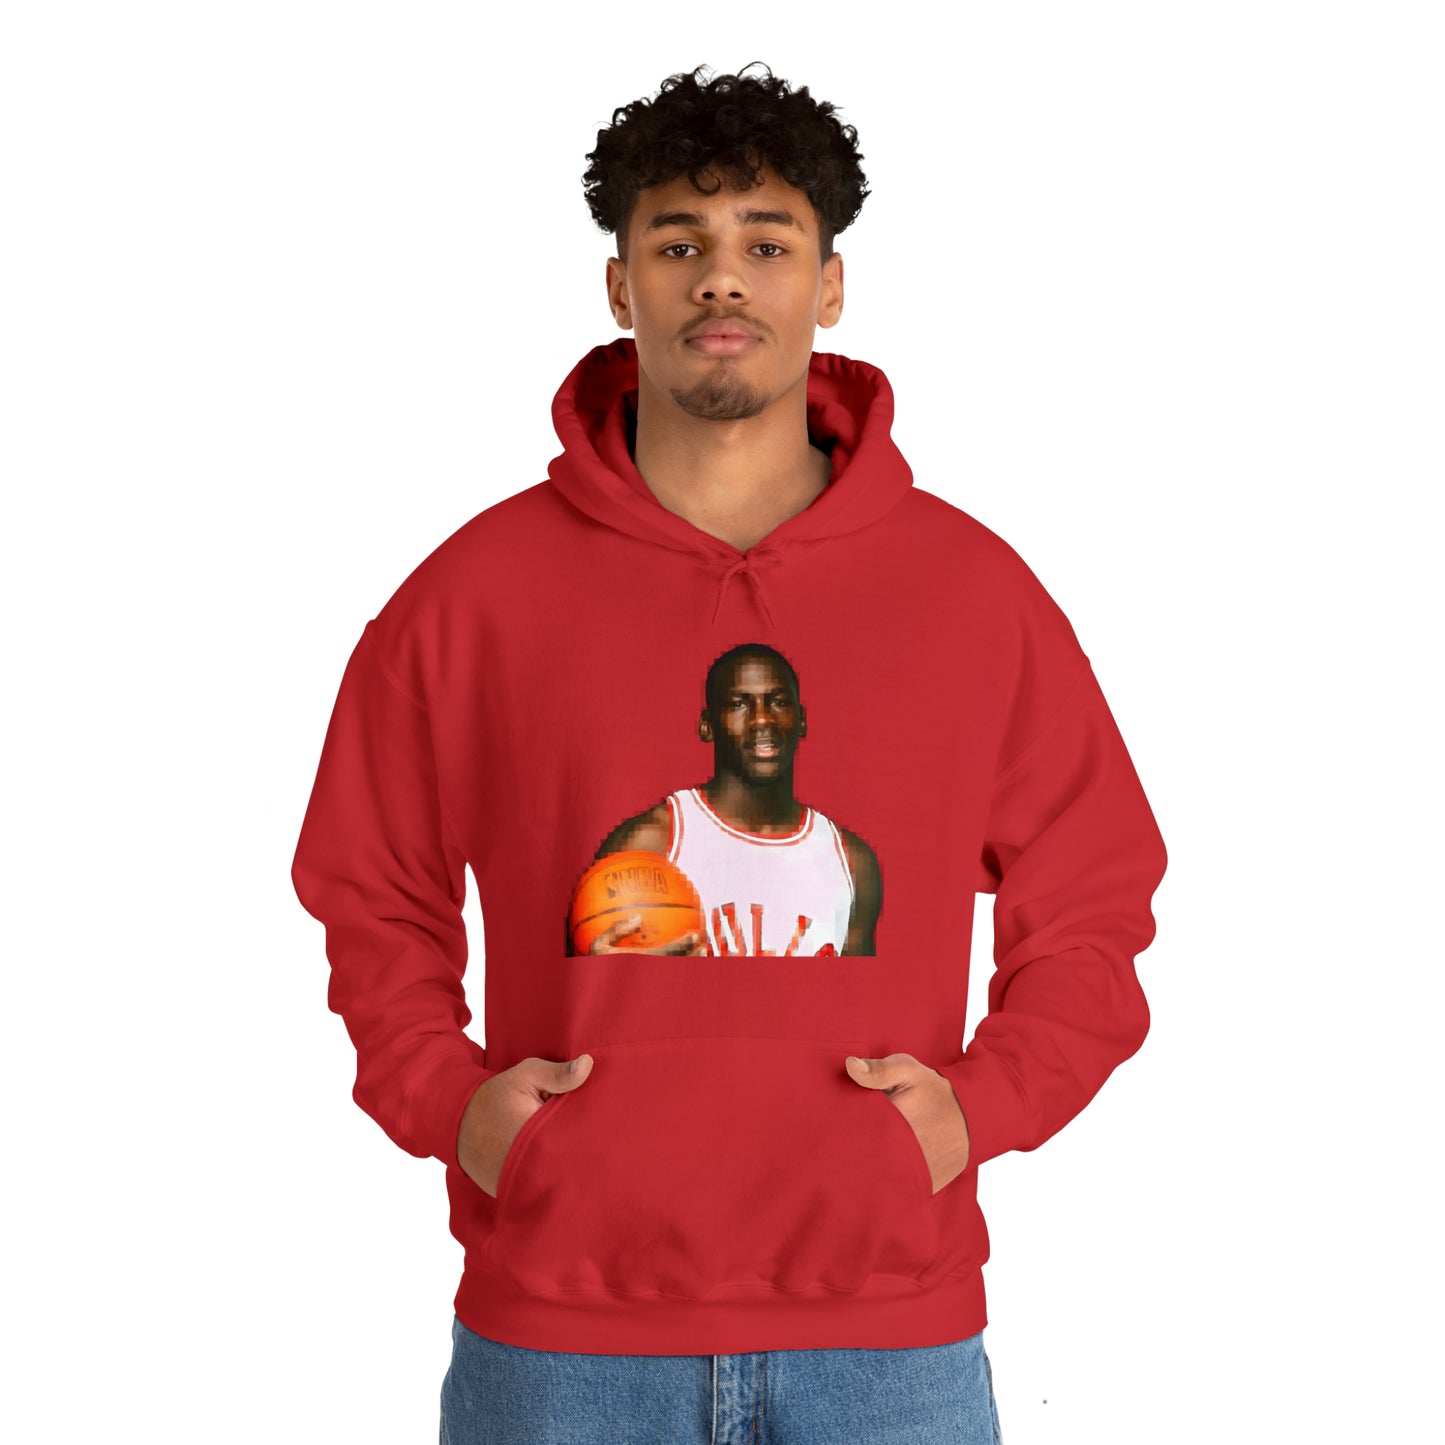 "MJ Rookie" - Hooded Sweatshirt